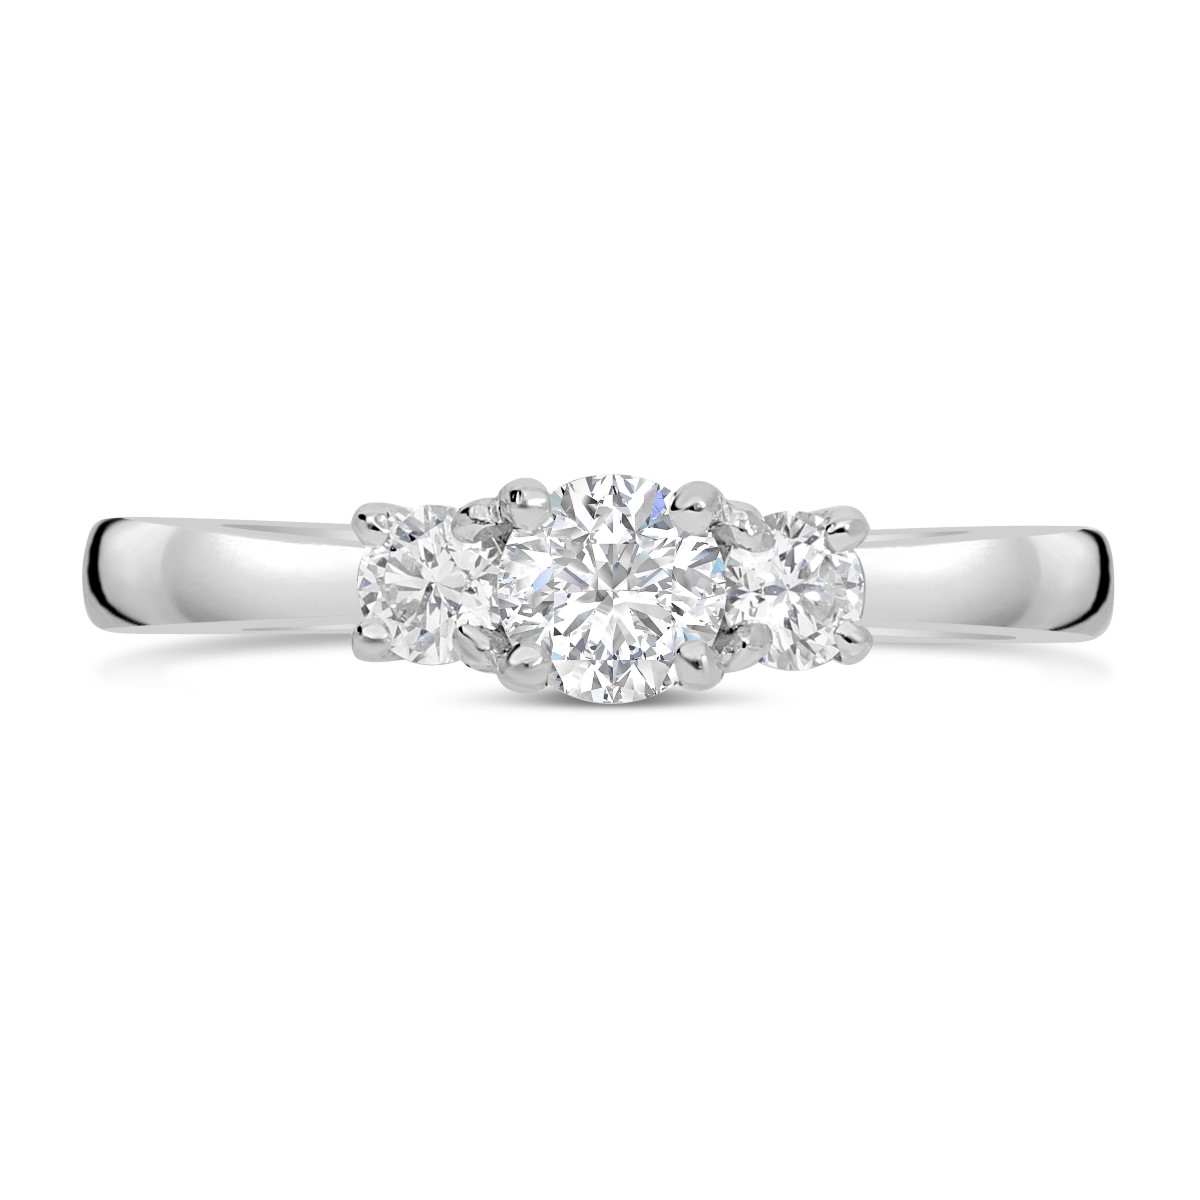 felicite-solitaires-diamants-certifies-trilogie-or-blanc-750-